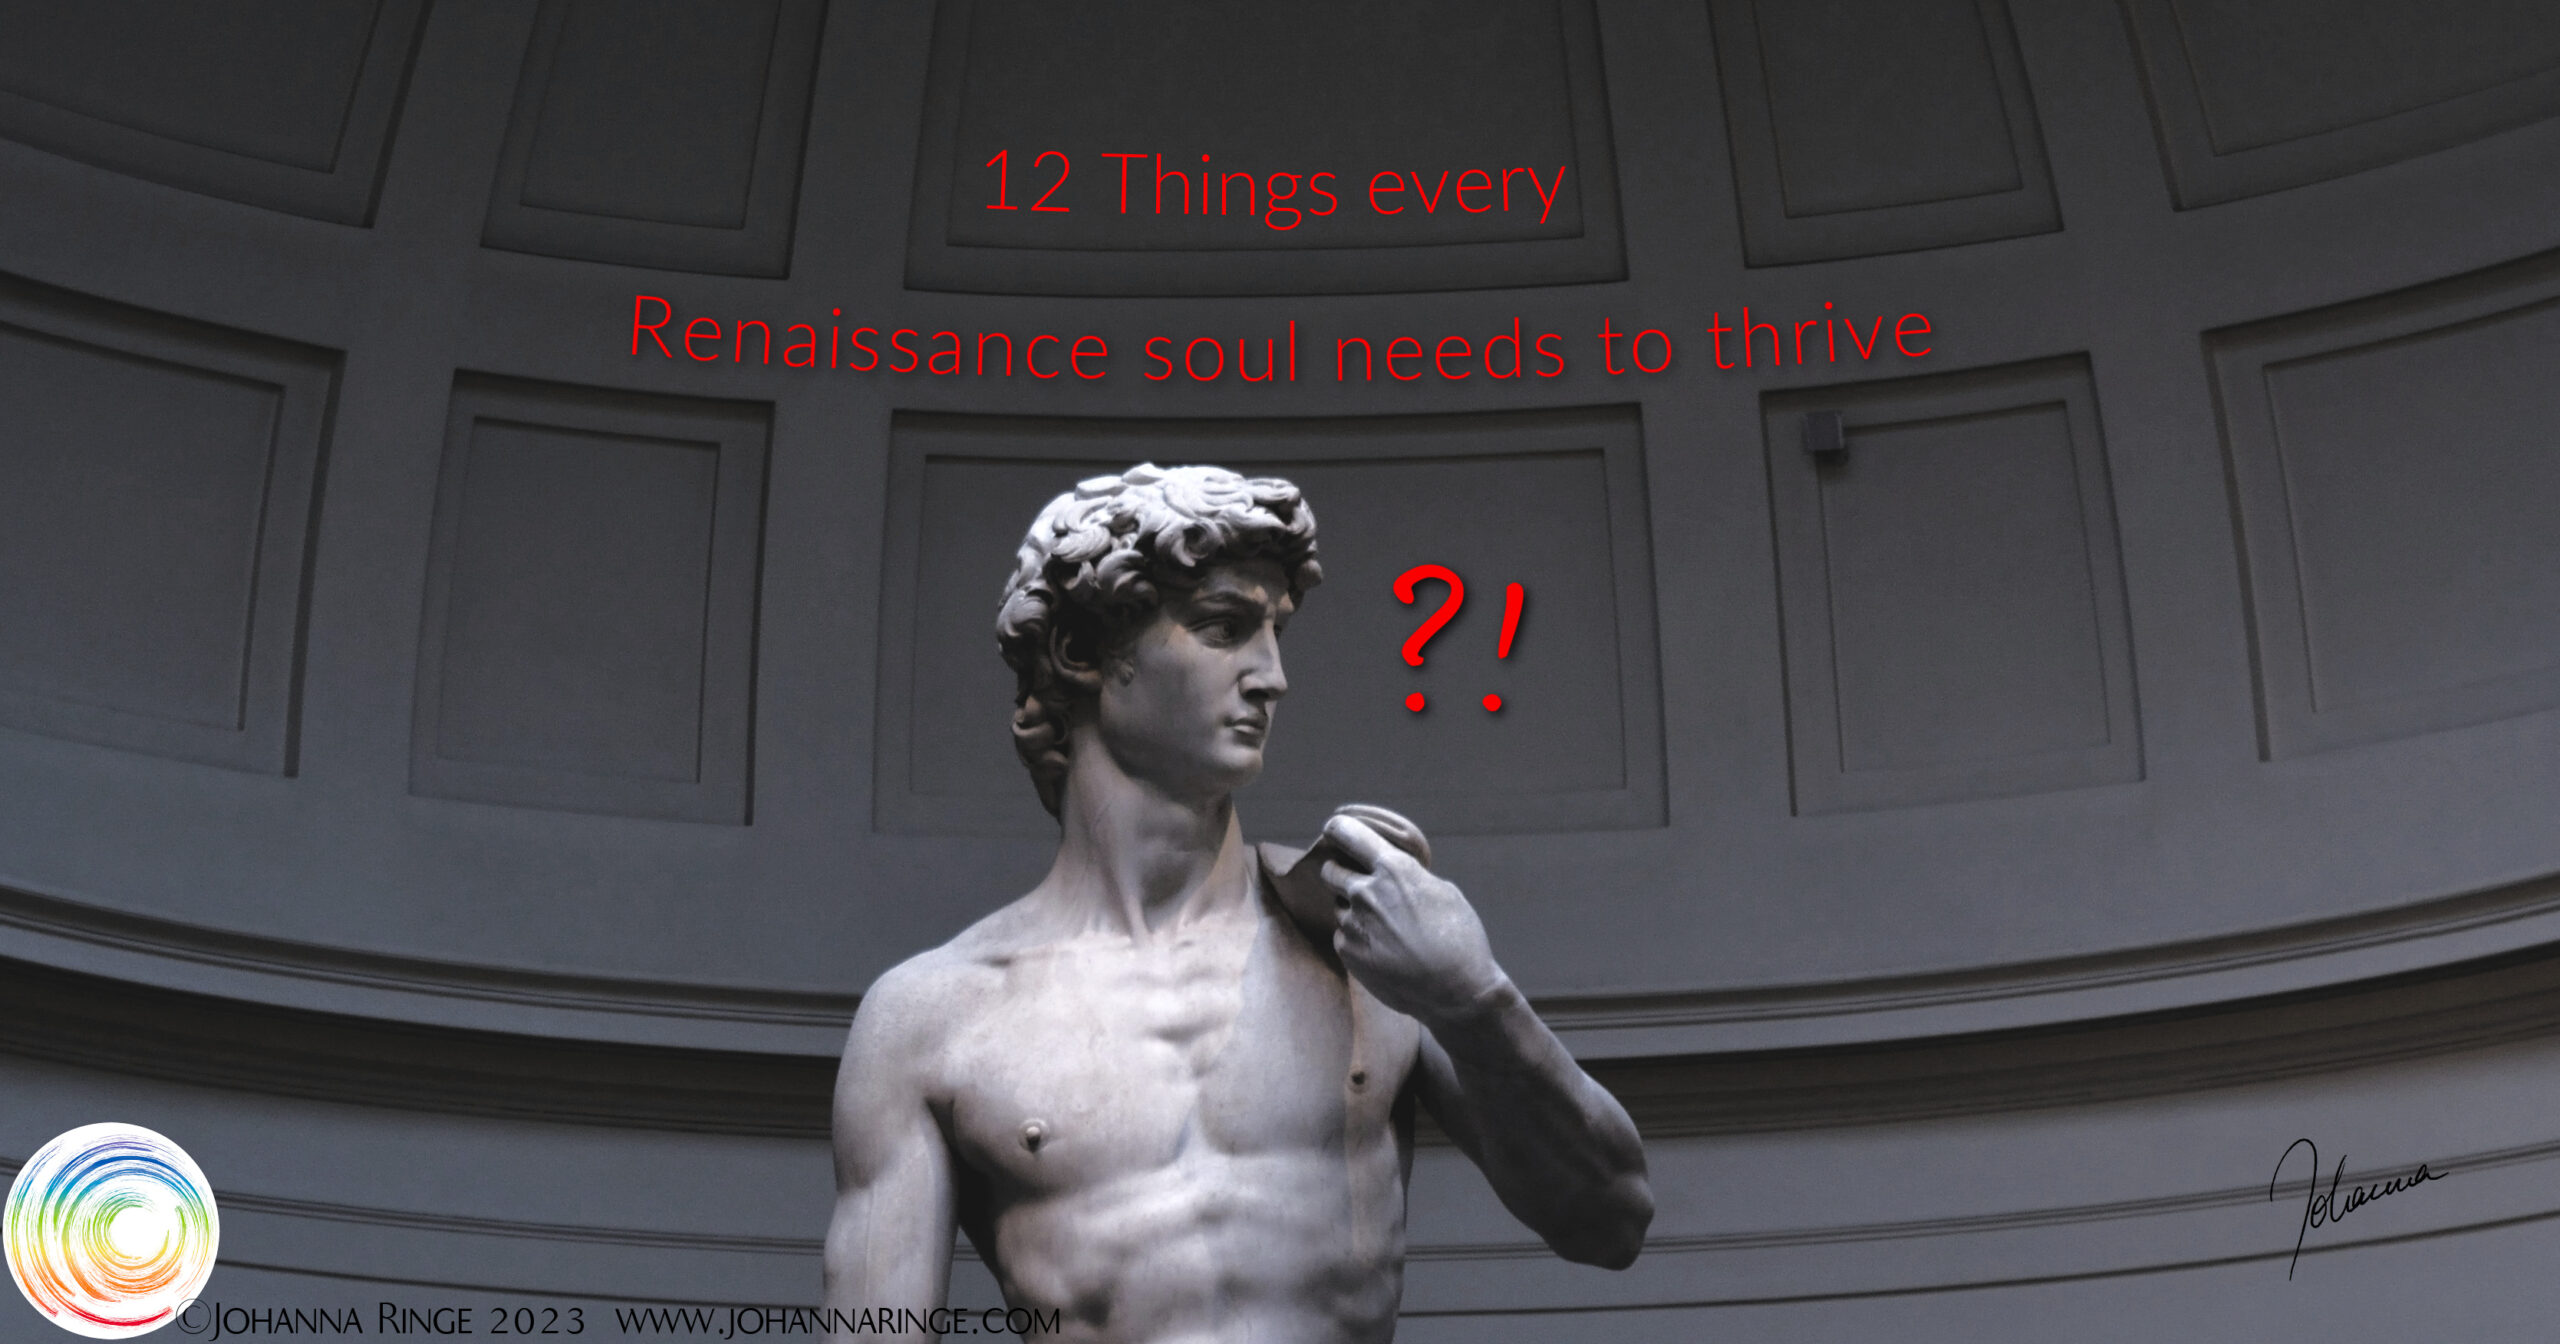 12 things Renaissance souls need to thrive (Text over photo of Michelangelo's David) ©Johanna Ringe 2023 www.johannaringe.com